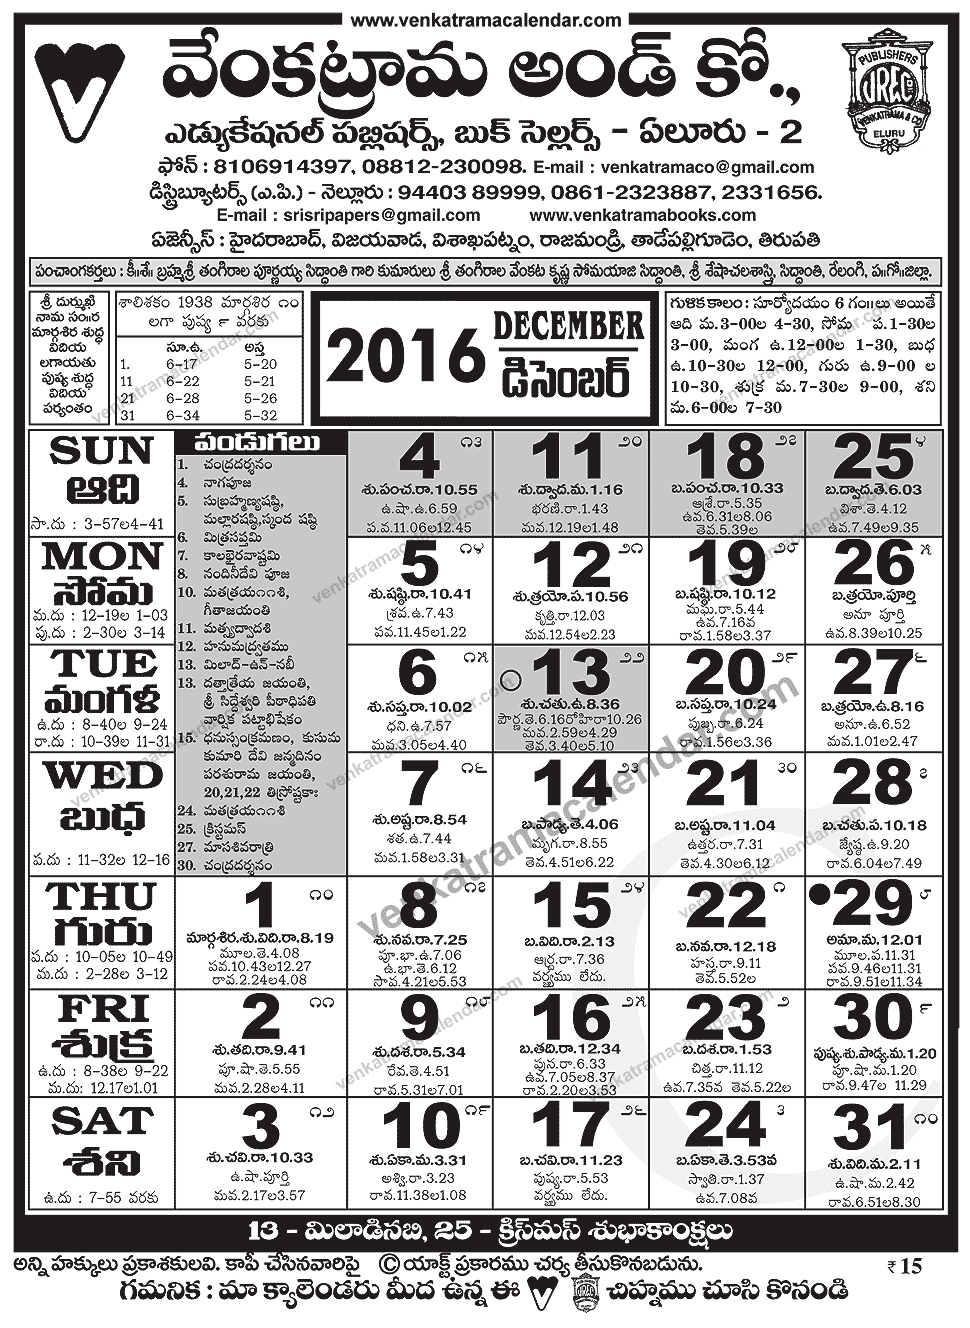 venkatrama-co-2016-december-telugu-calendar-festivals-holidays